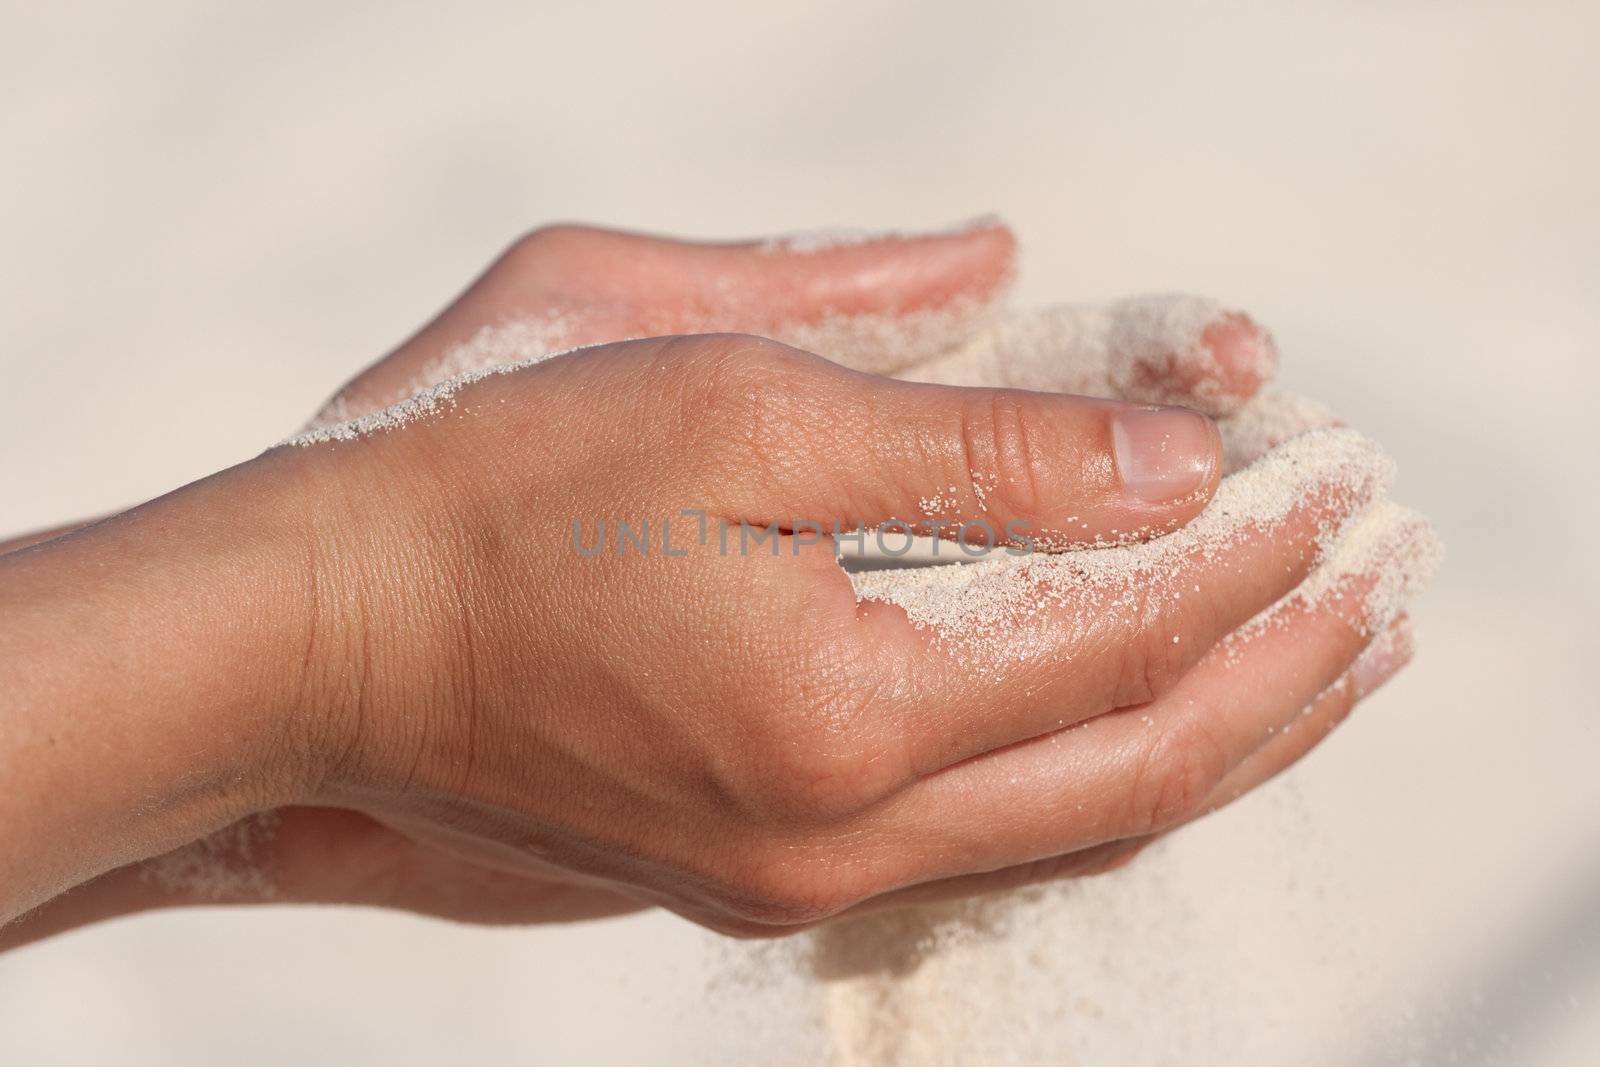 Sand running through hands by dimol